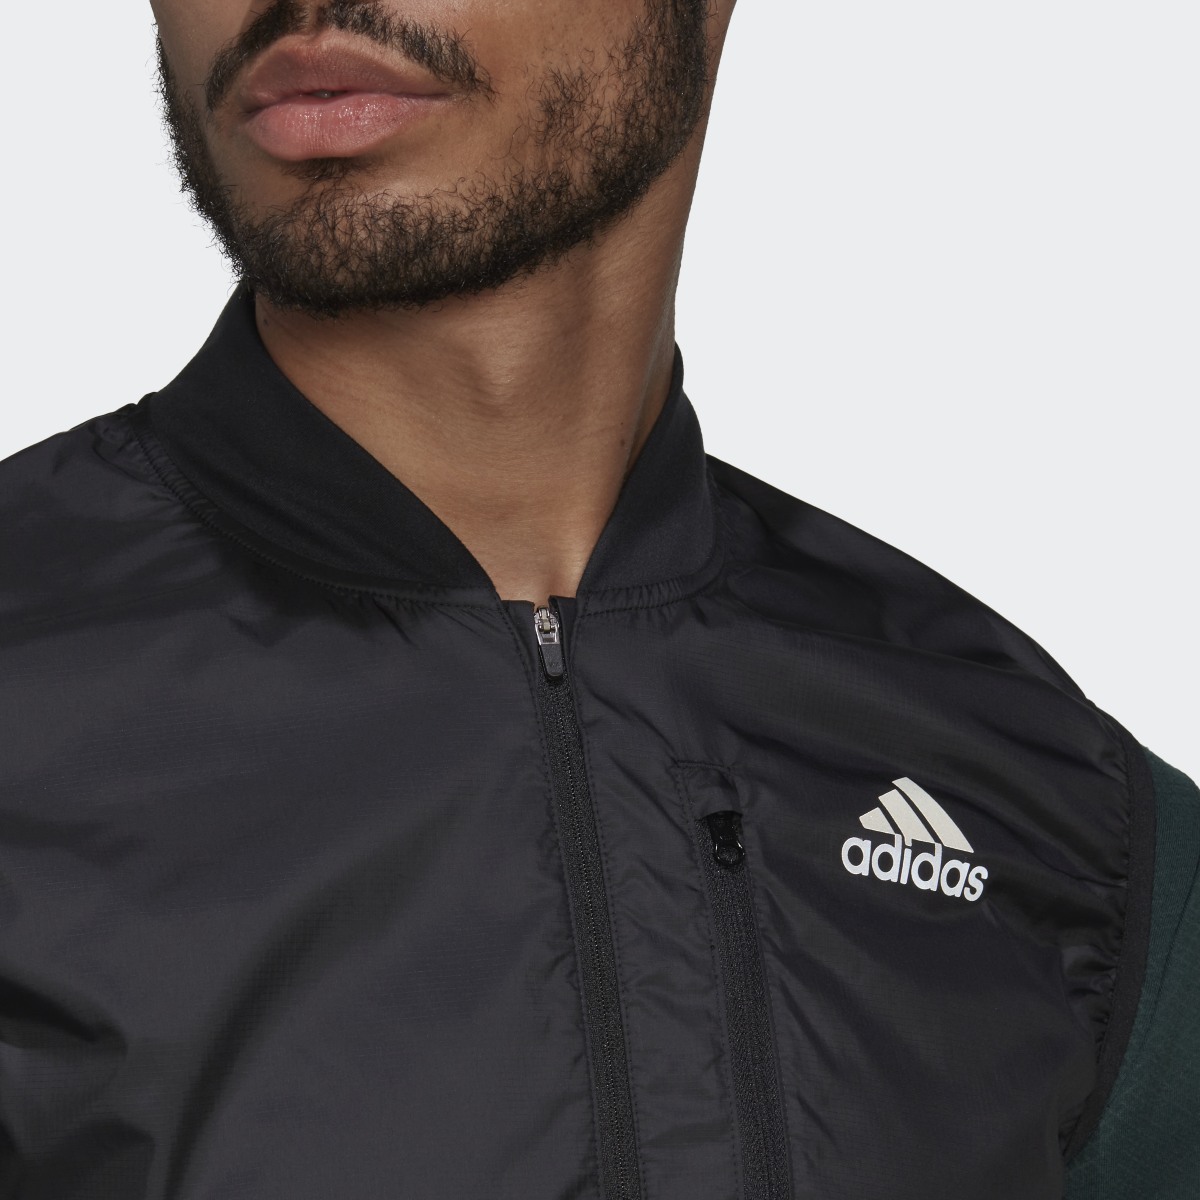 Adidas Own the Run Vest. 7